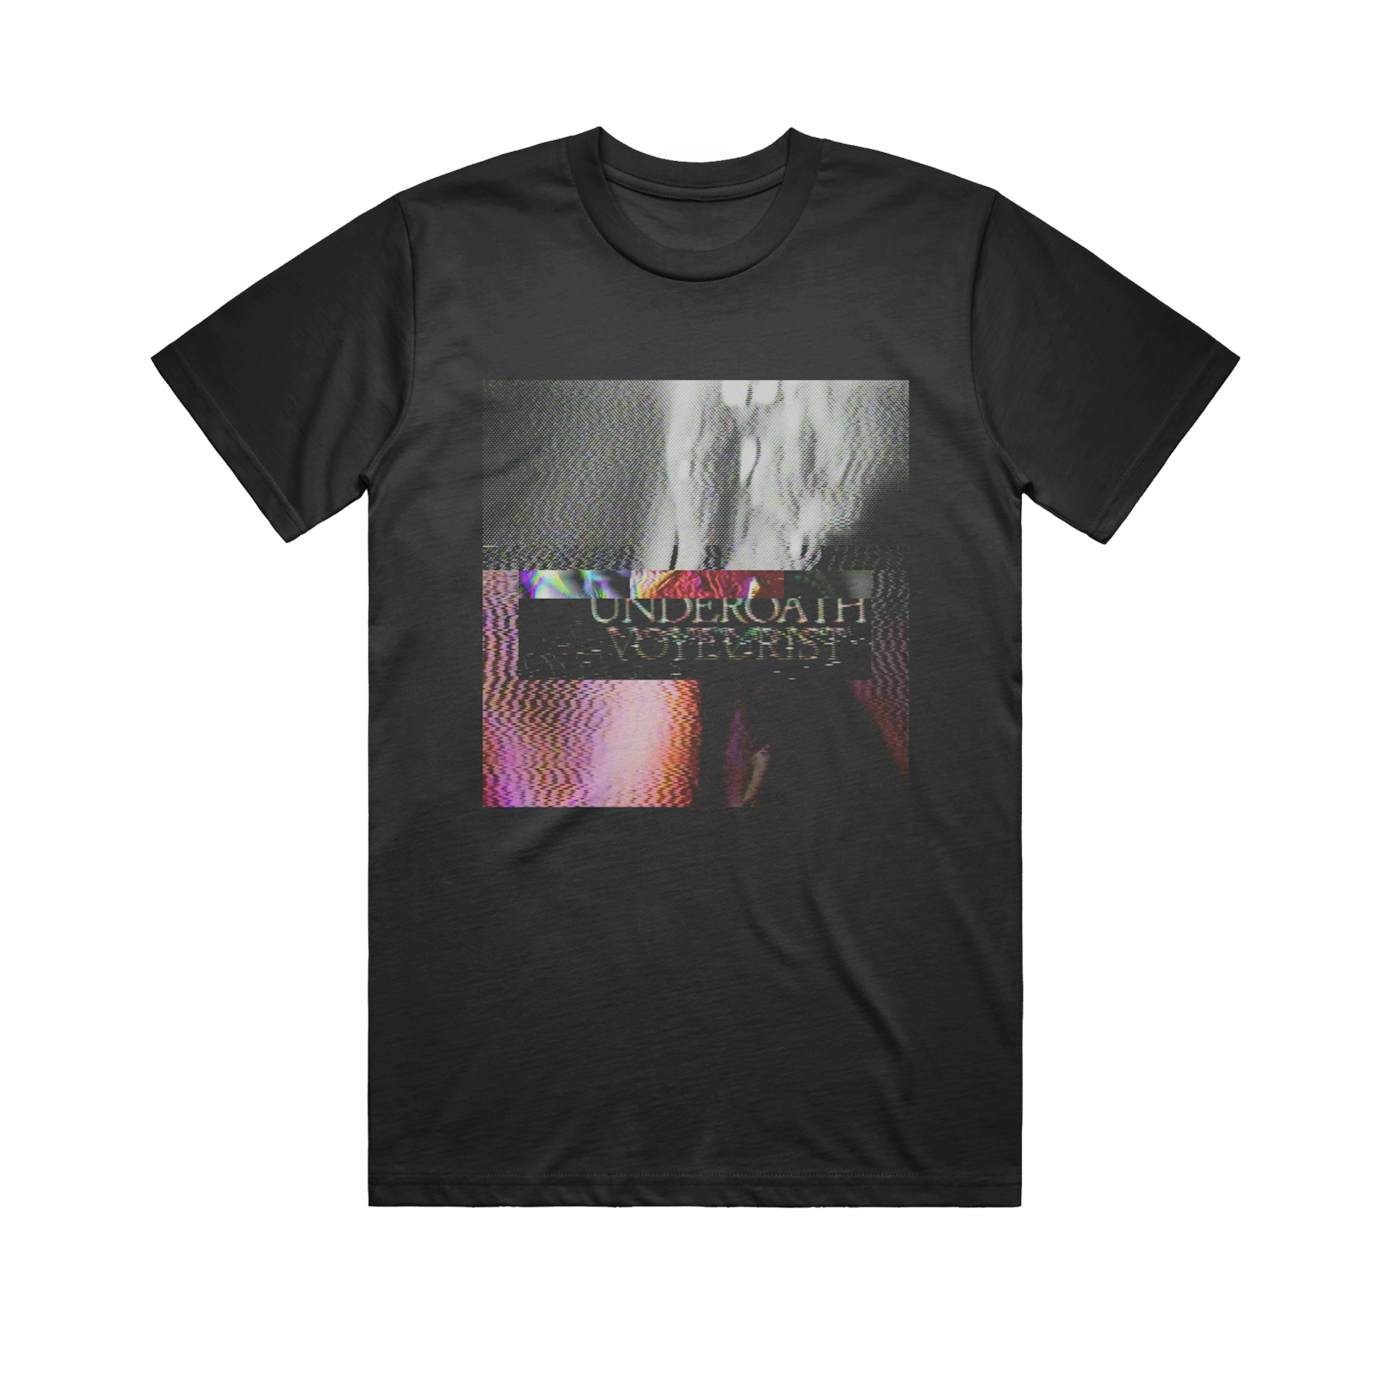 Underoath "Voyeurist Album" T-Shirt